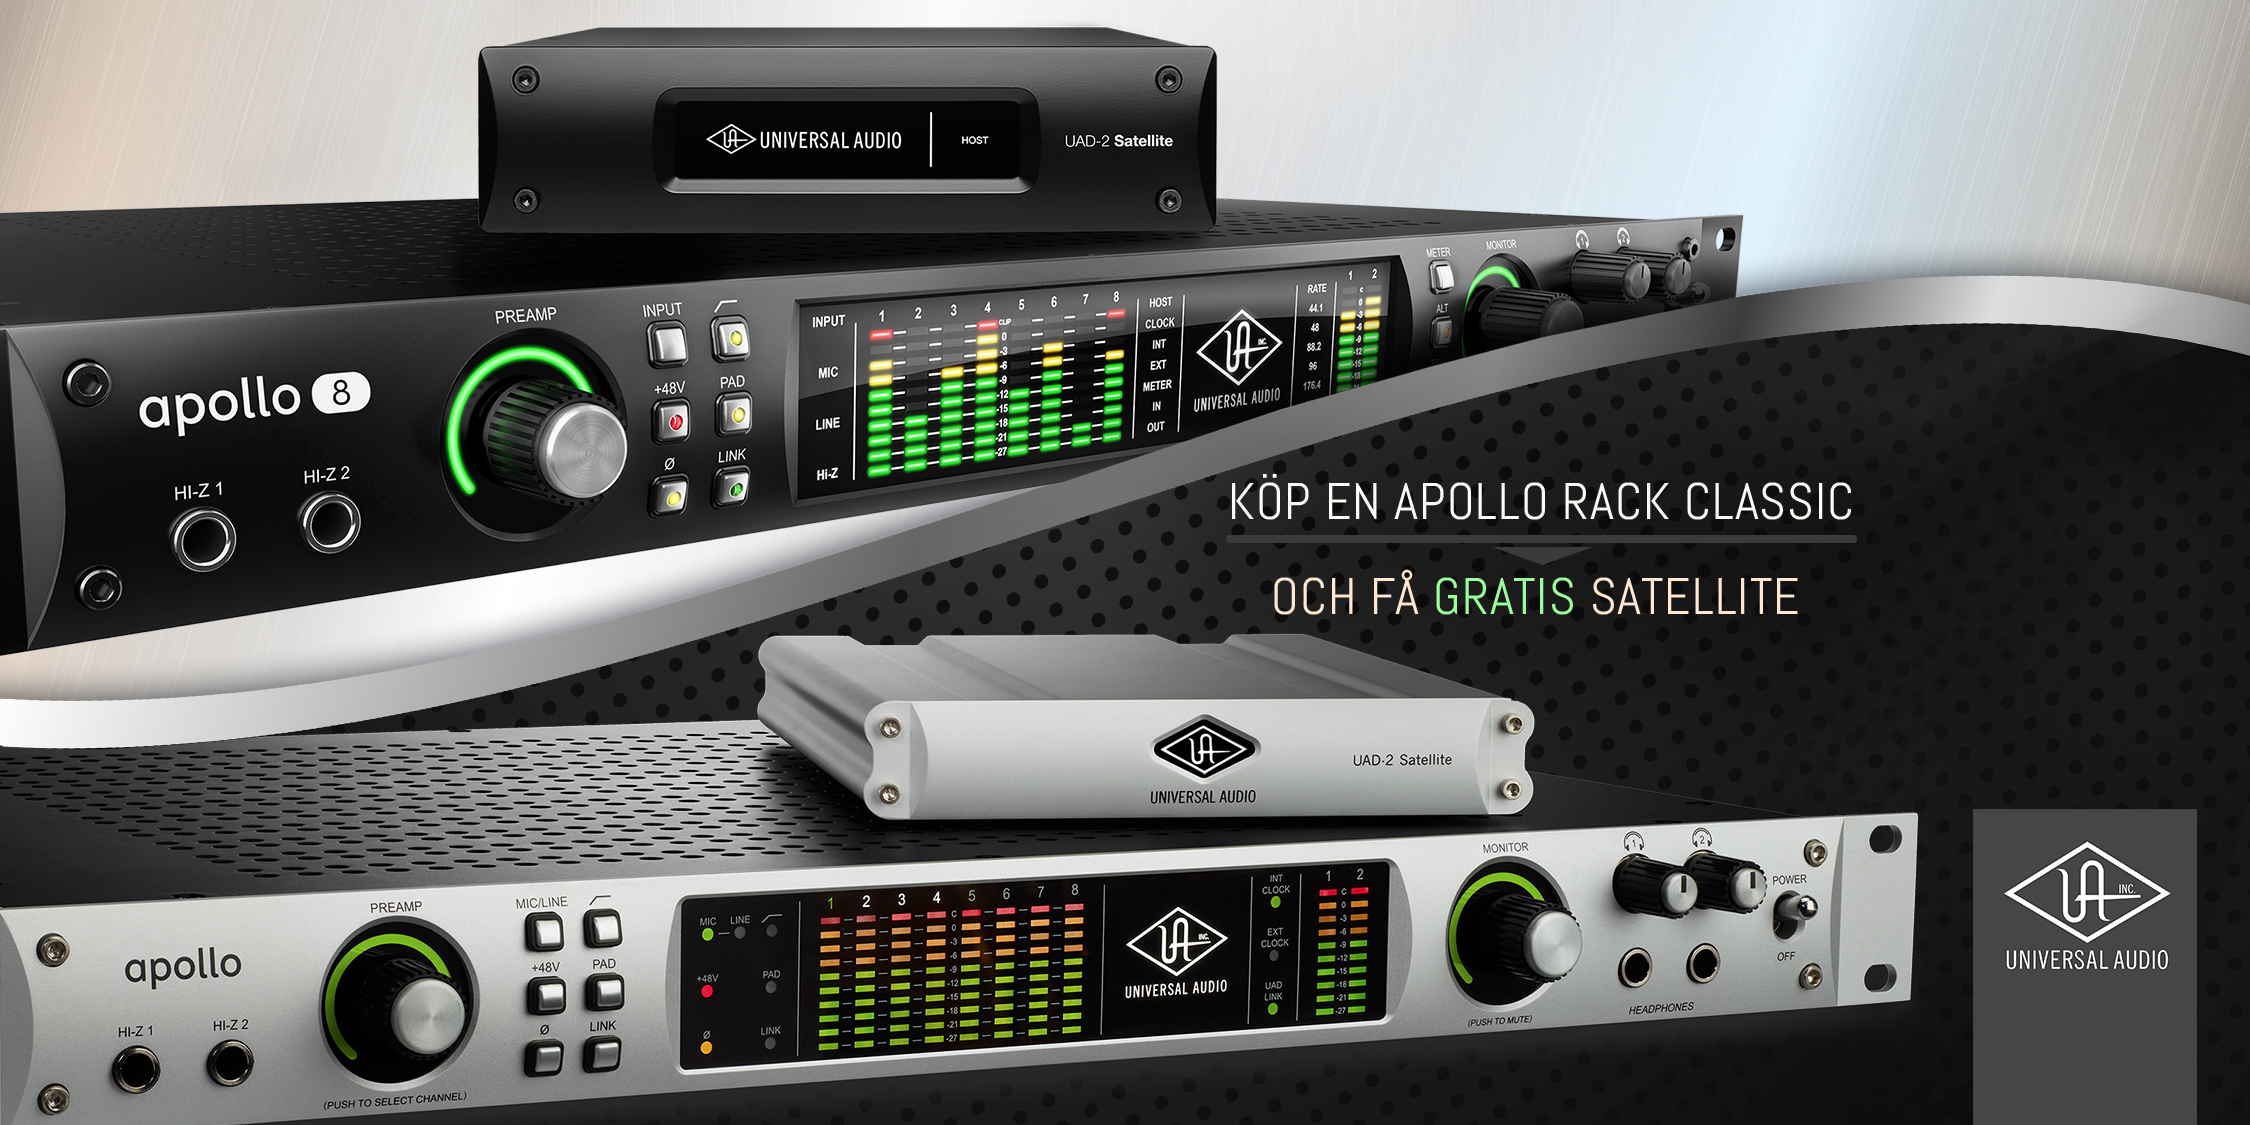 Universal Audio Kampanj – Köp Apollo Rack Classic och få gratis UAD-2 Satellite